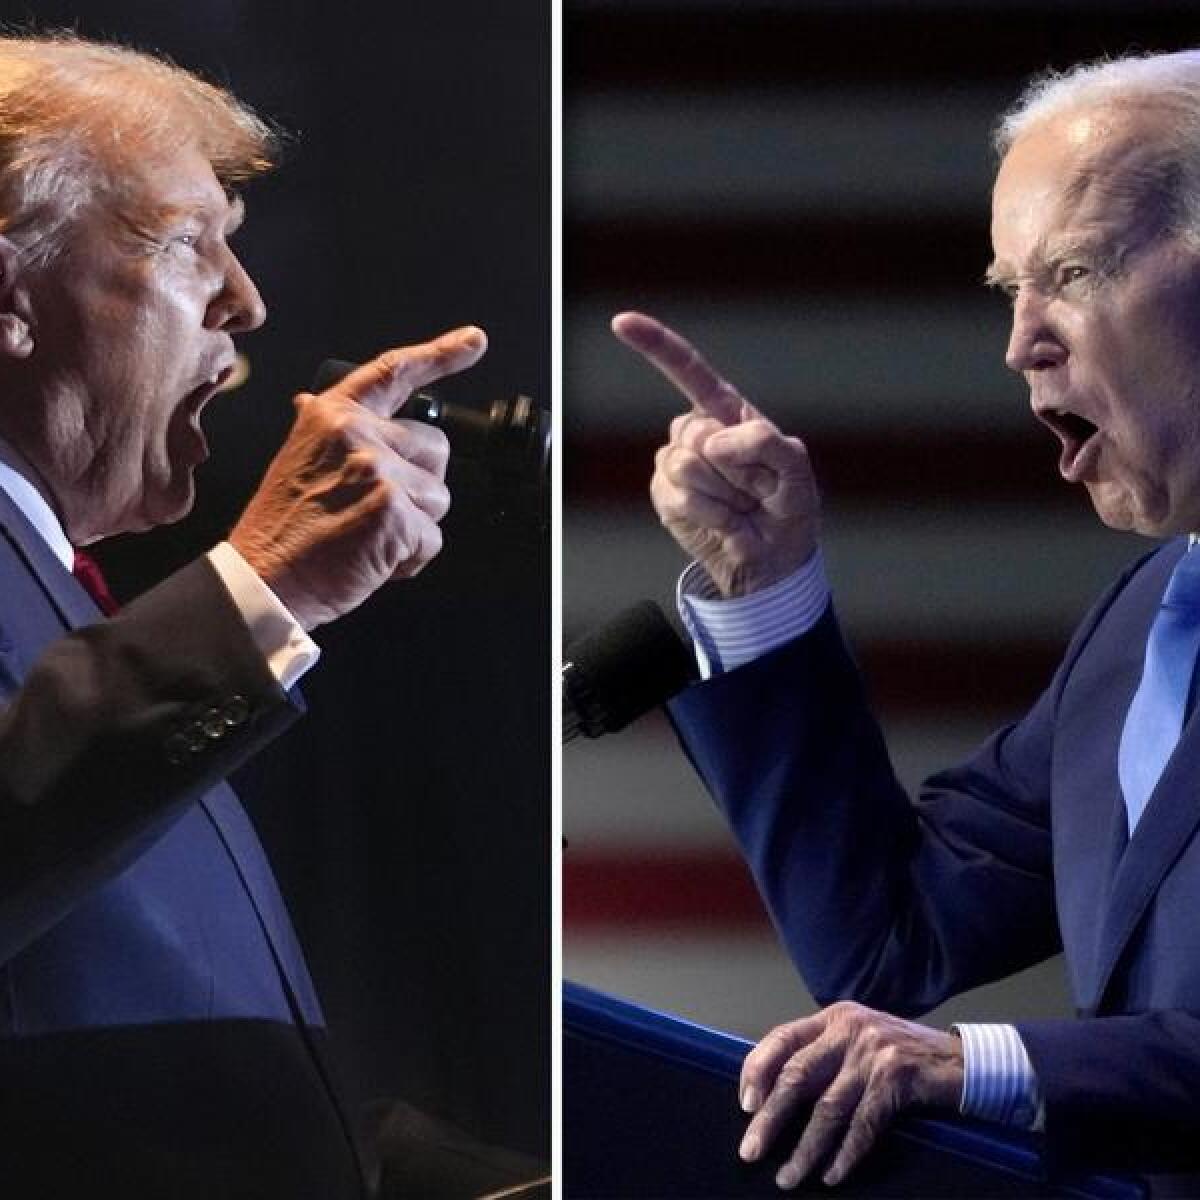 Former president Donald Trump and President Joe Biden